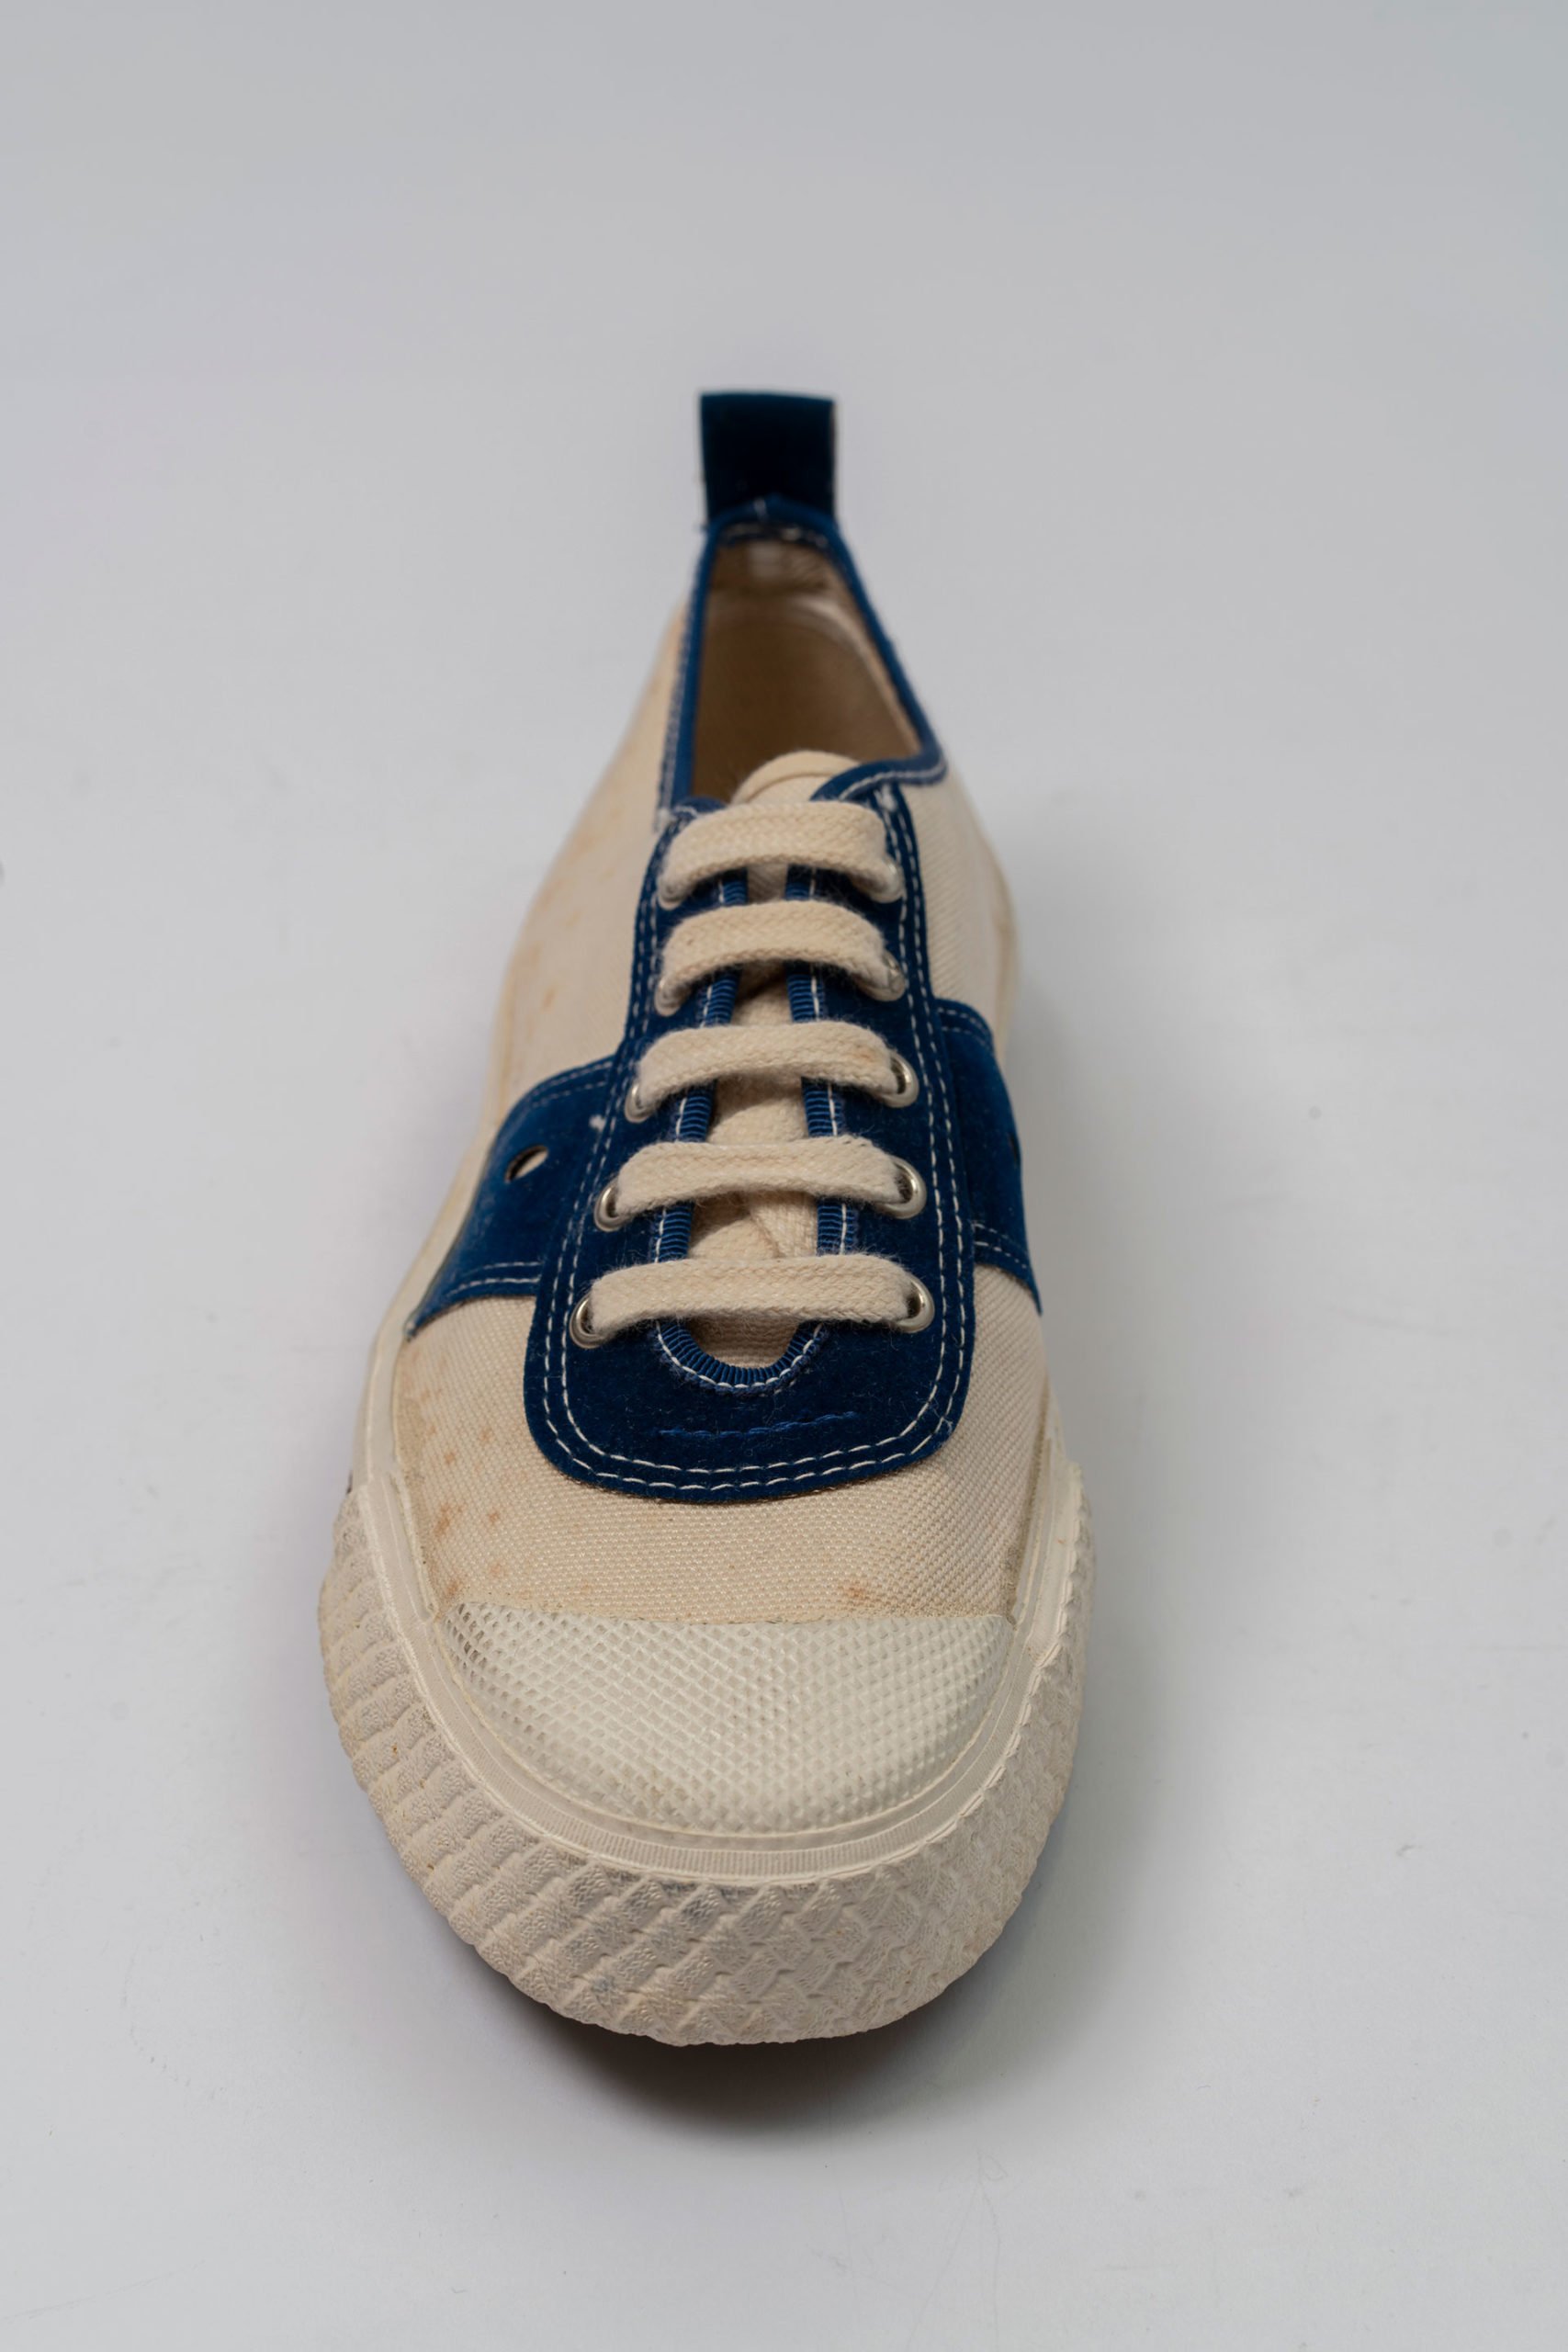 trento-panna-velluto-blu-sneakers-vintage-trentovintage-vintagesneakers-duemilanomarittima-letsdue-letsdueit-deadstock-deadstockvintage_06-scaled